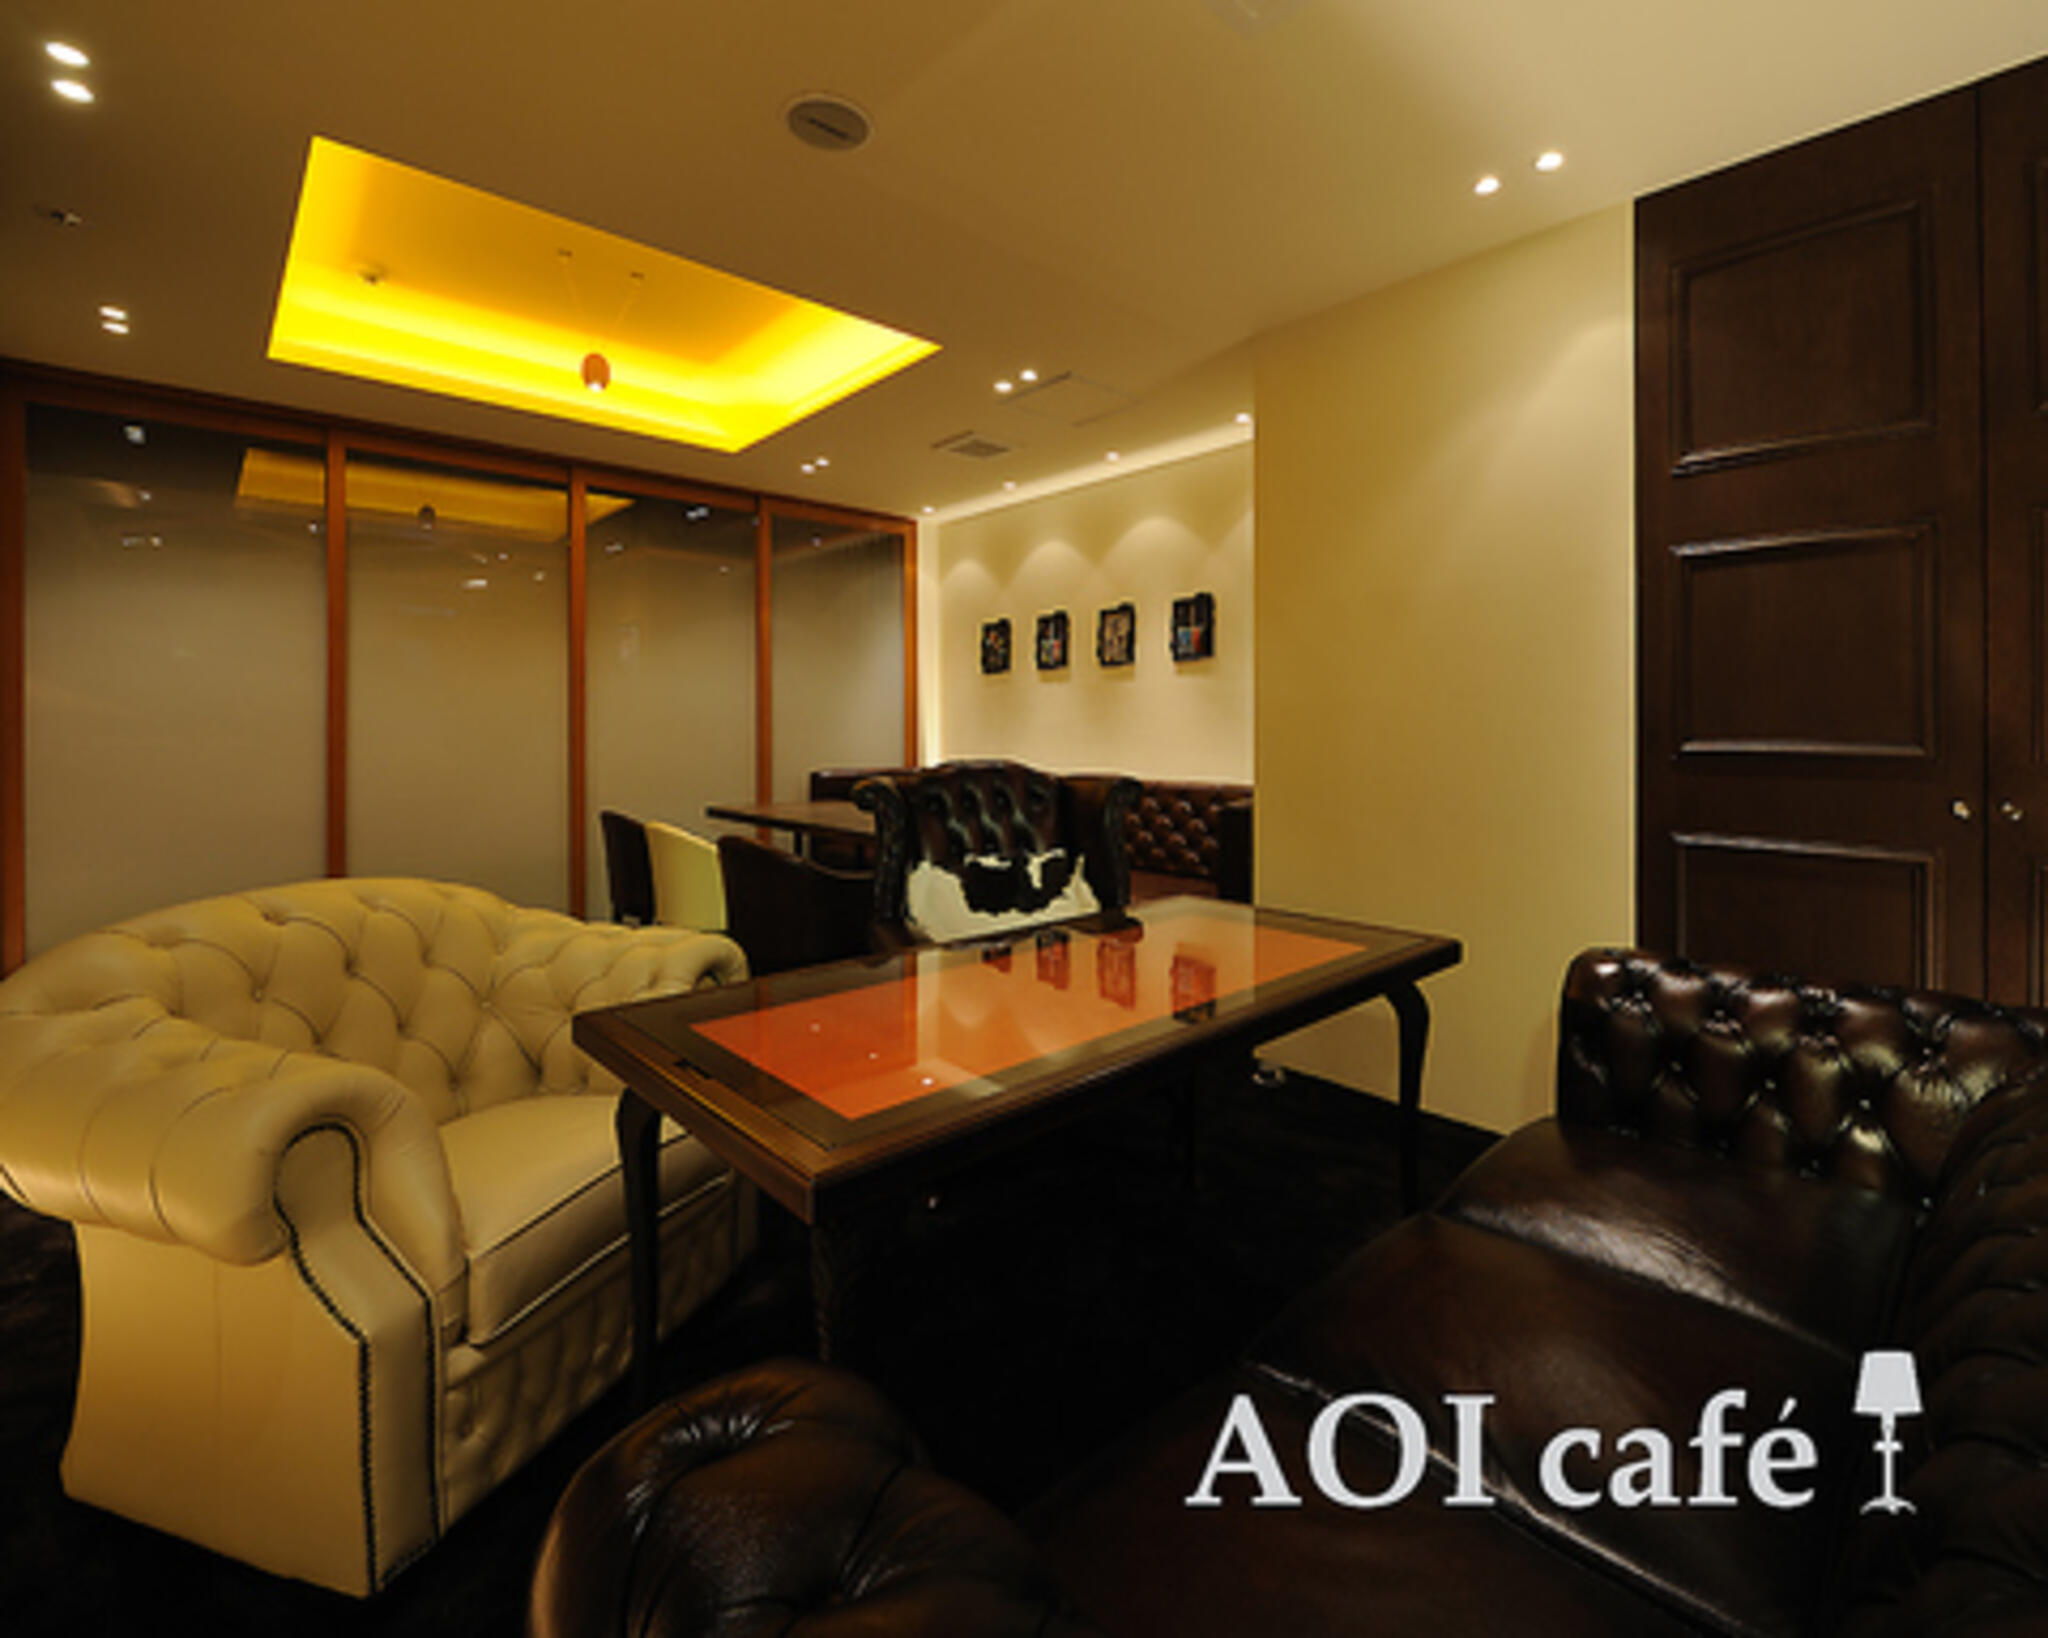 AOI cafeの代表写真2